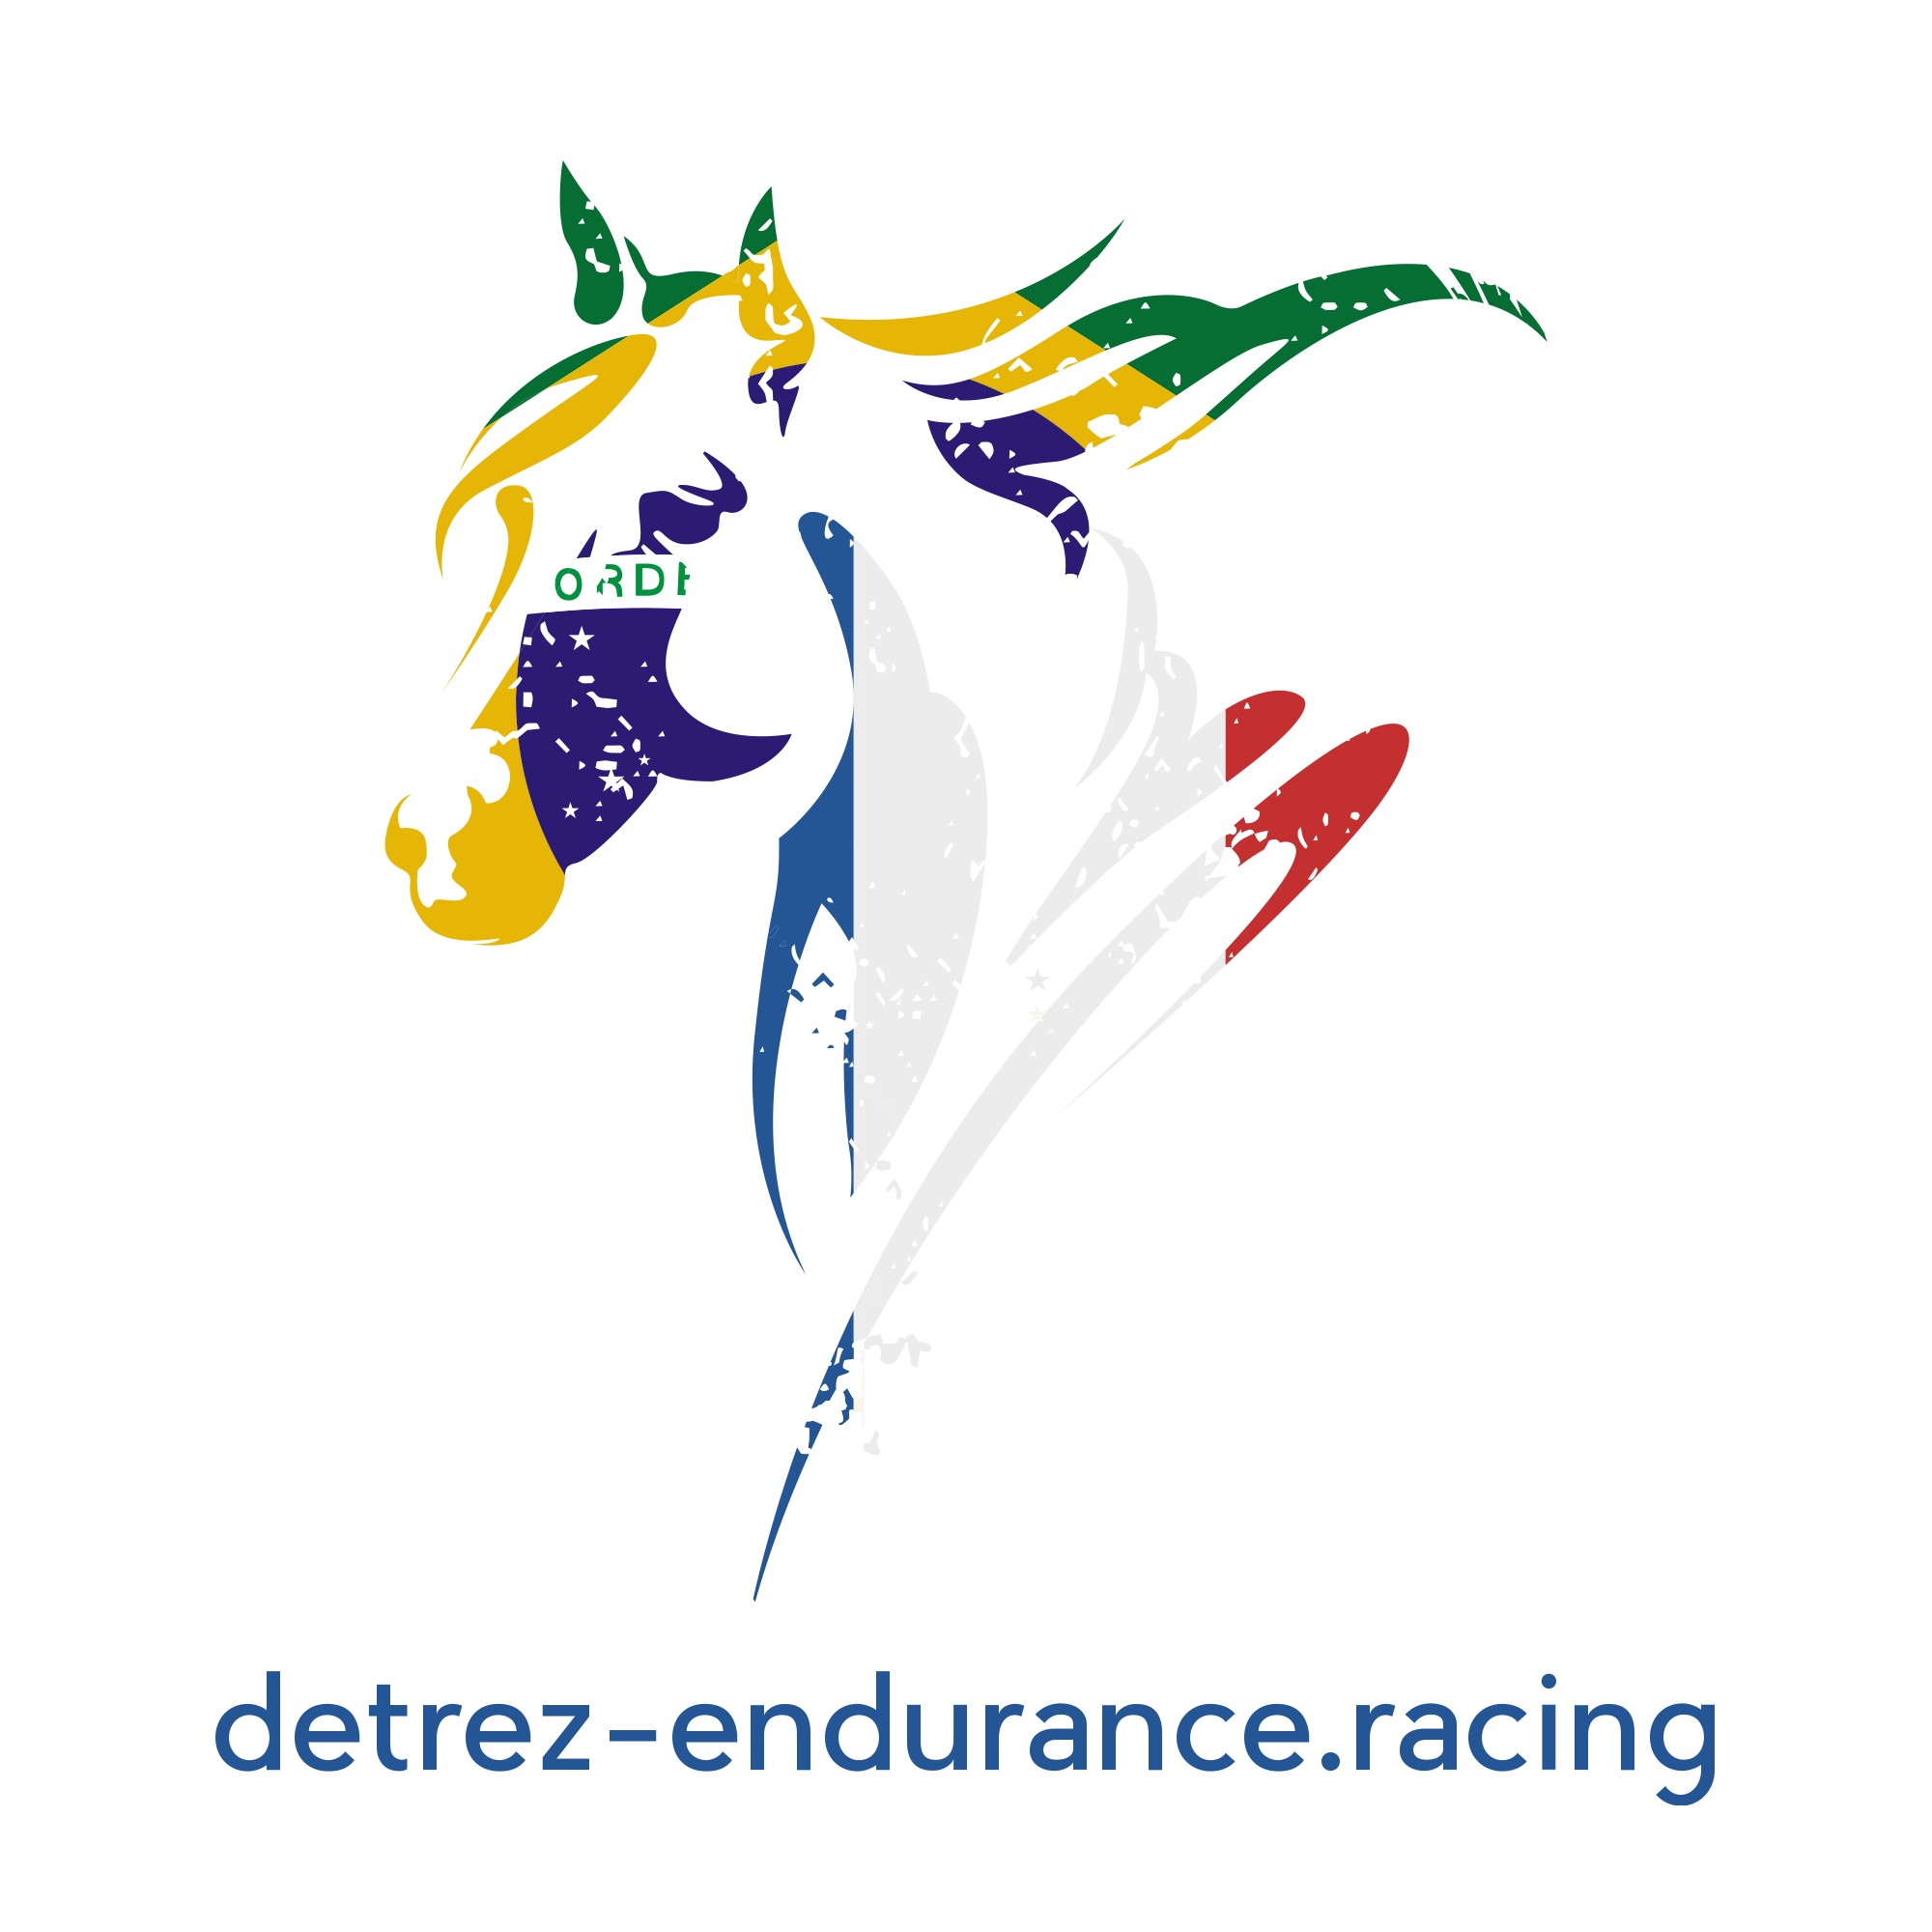 detrez-endurance.racing logo